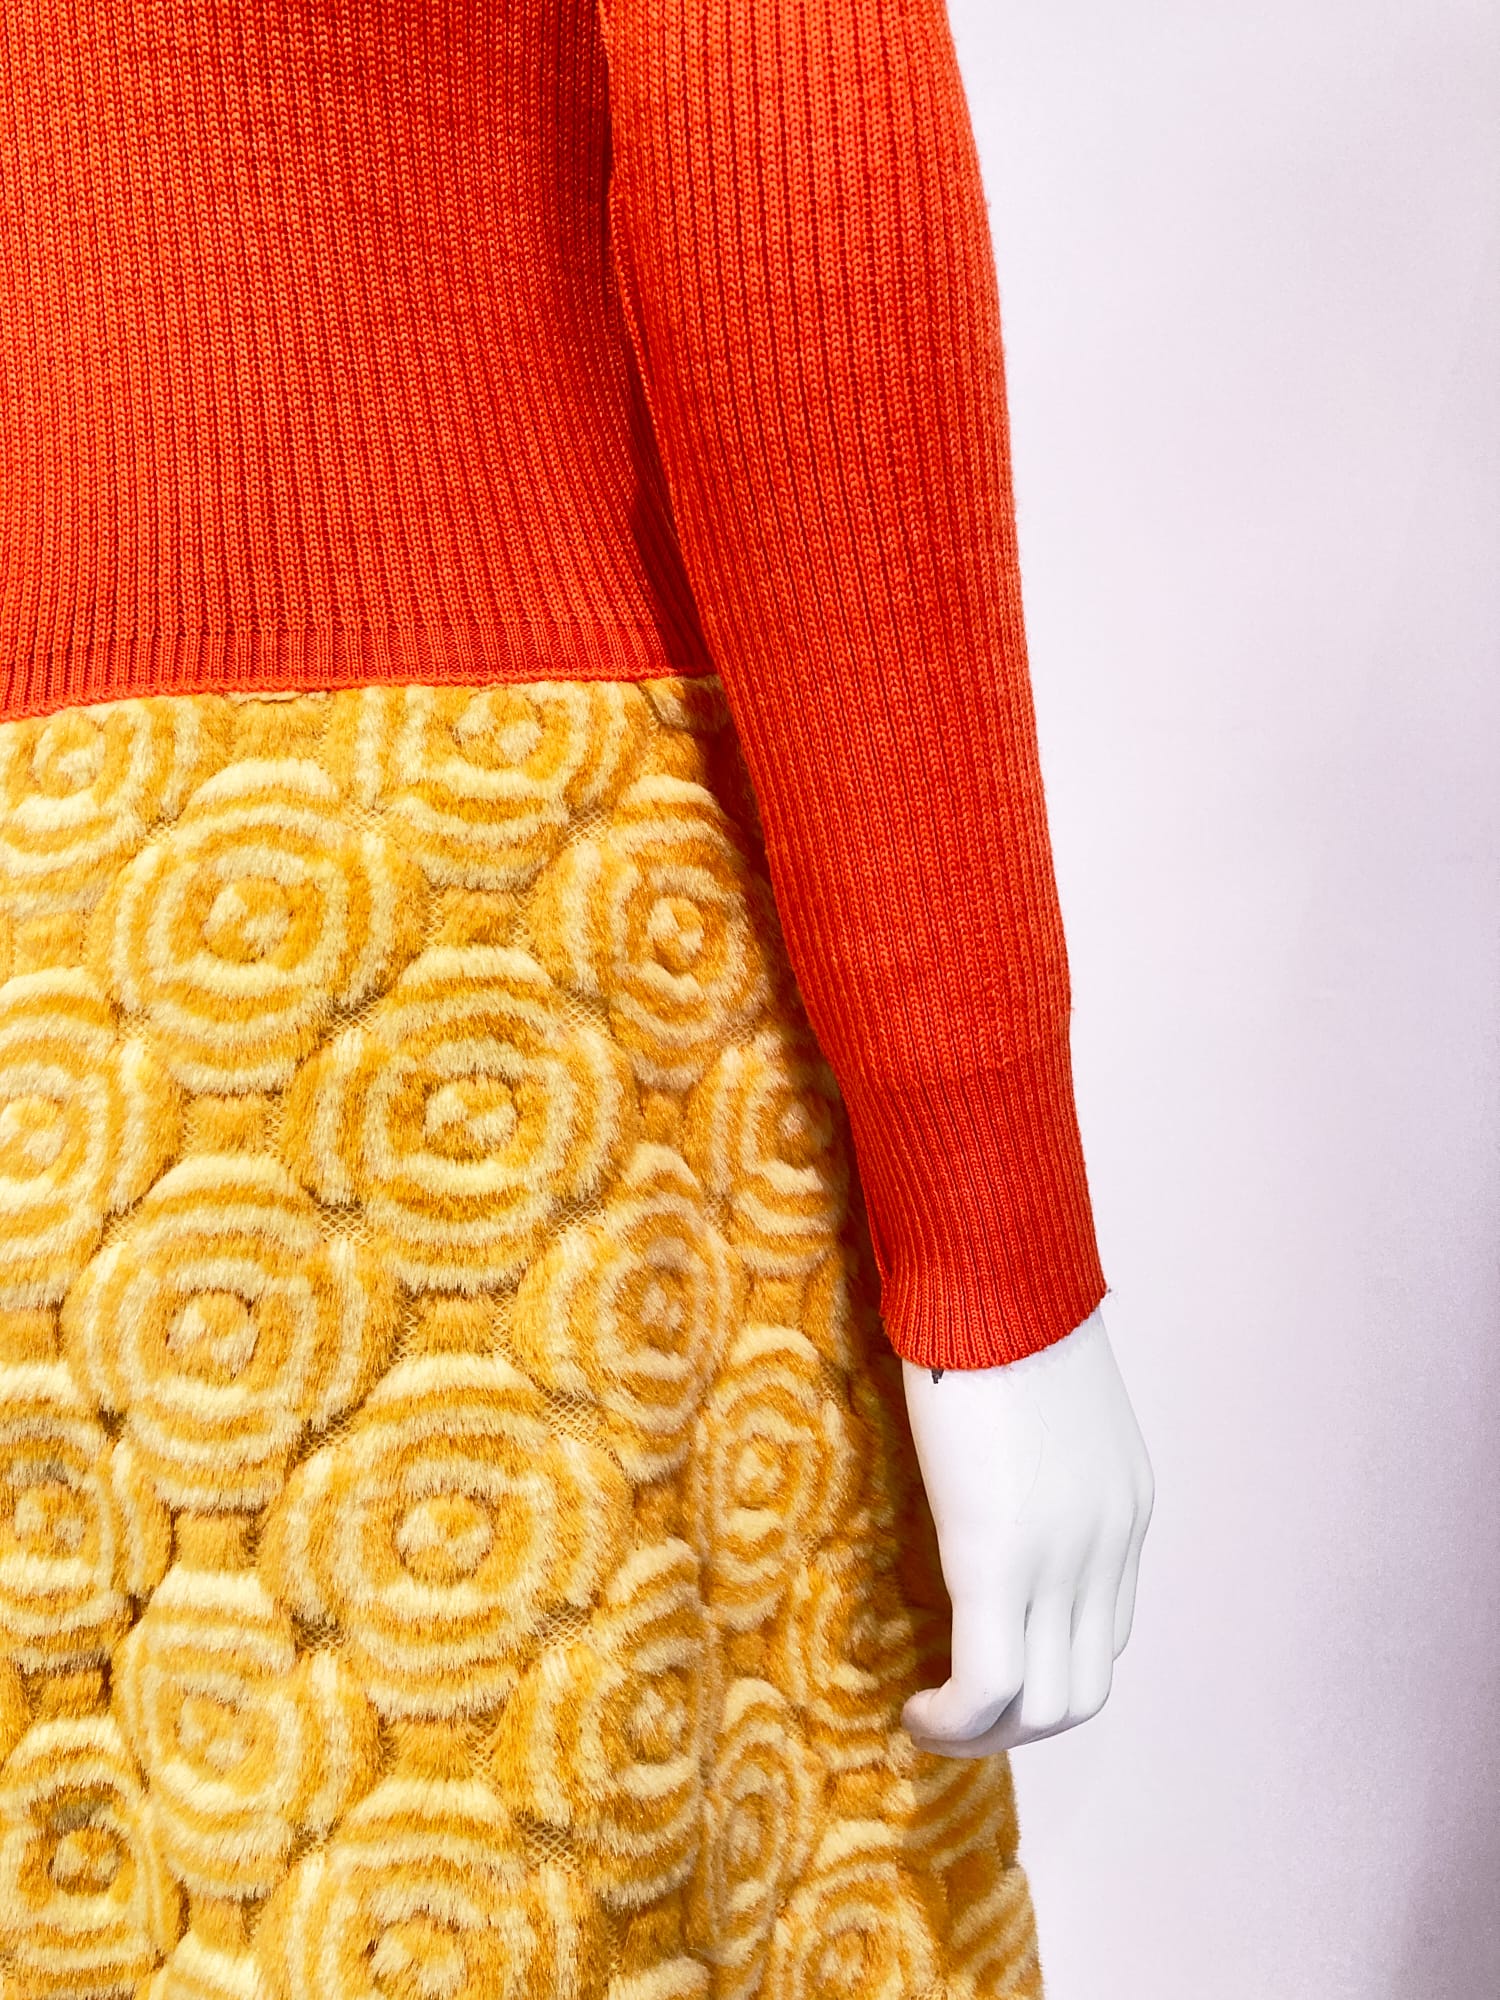 No Concept but Good Sense Yoichi Nagasawa 1990s orange yellow multi fabric dress